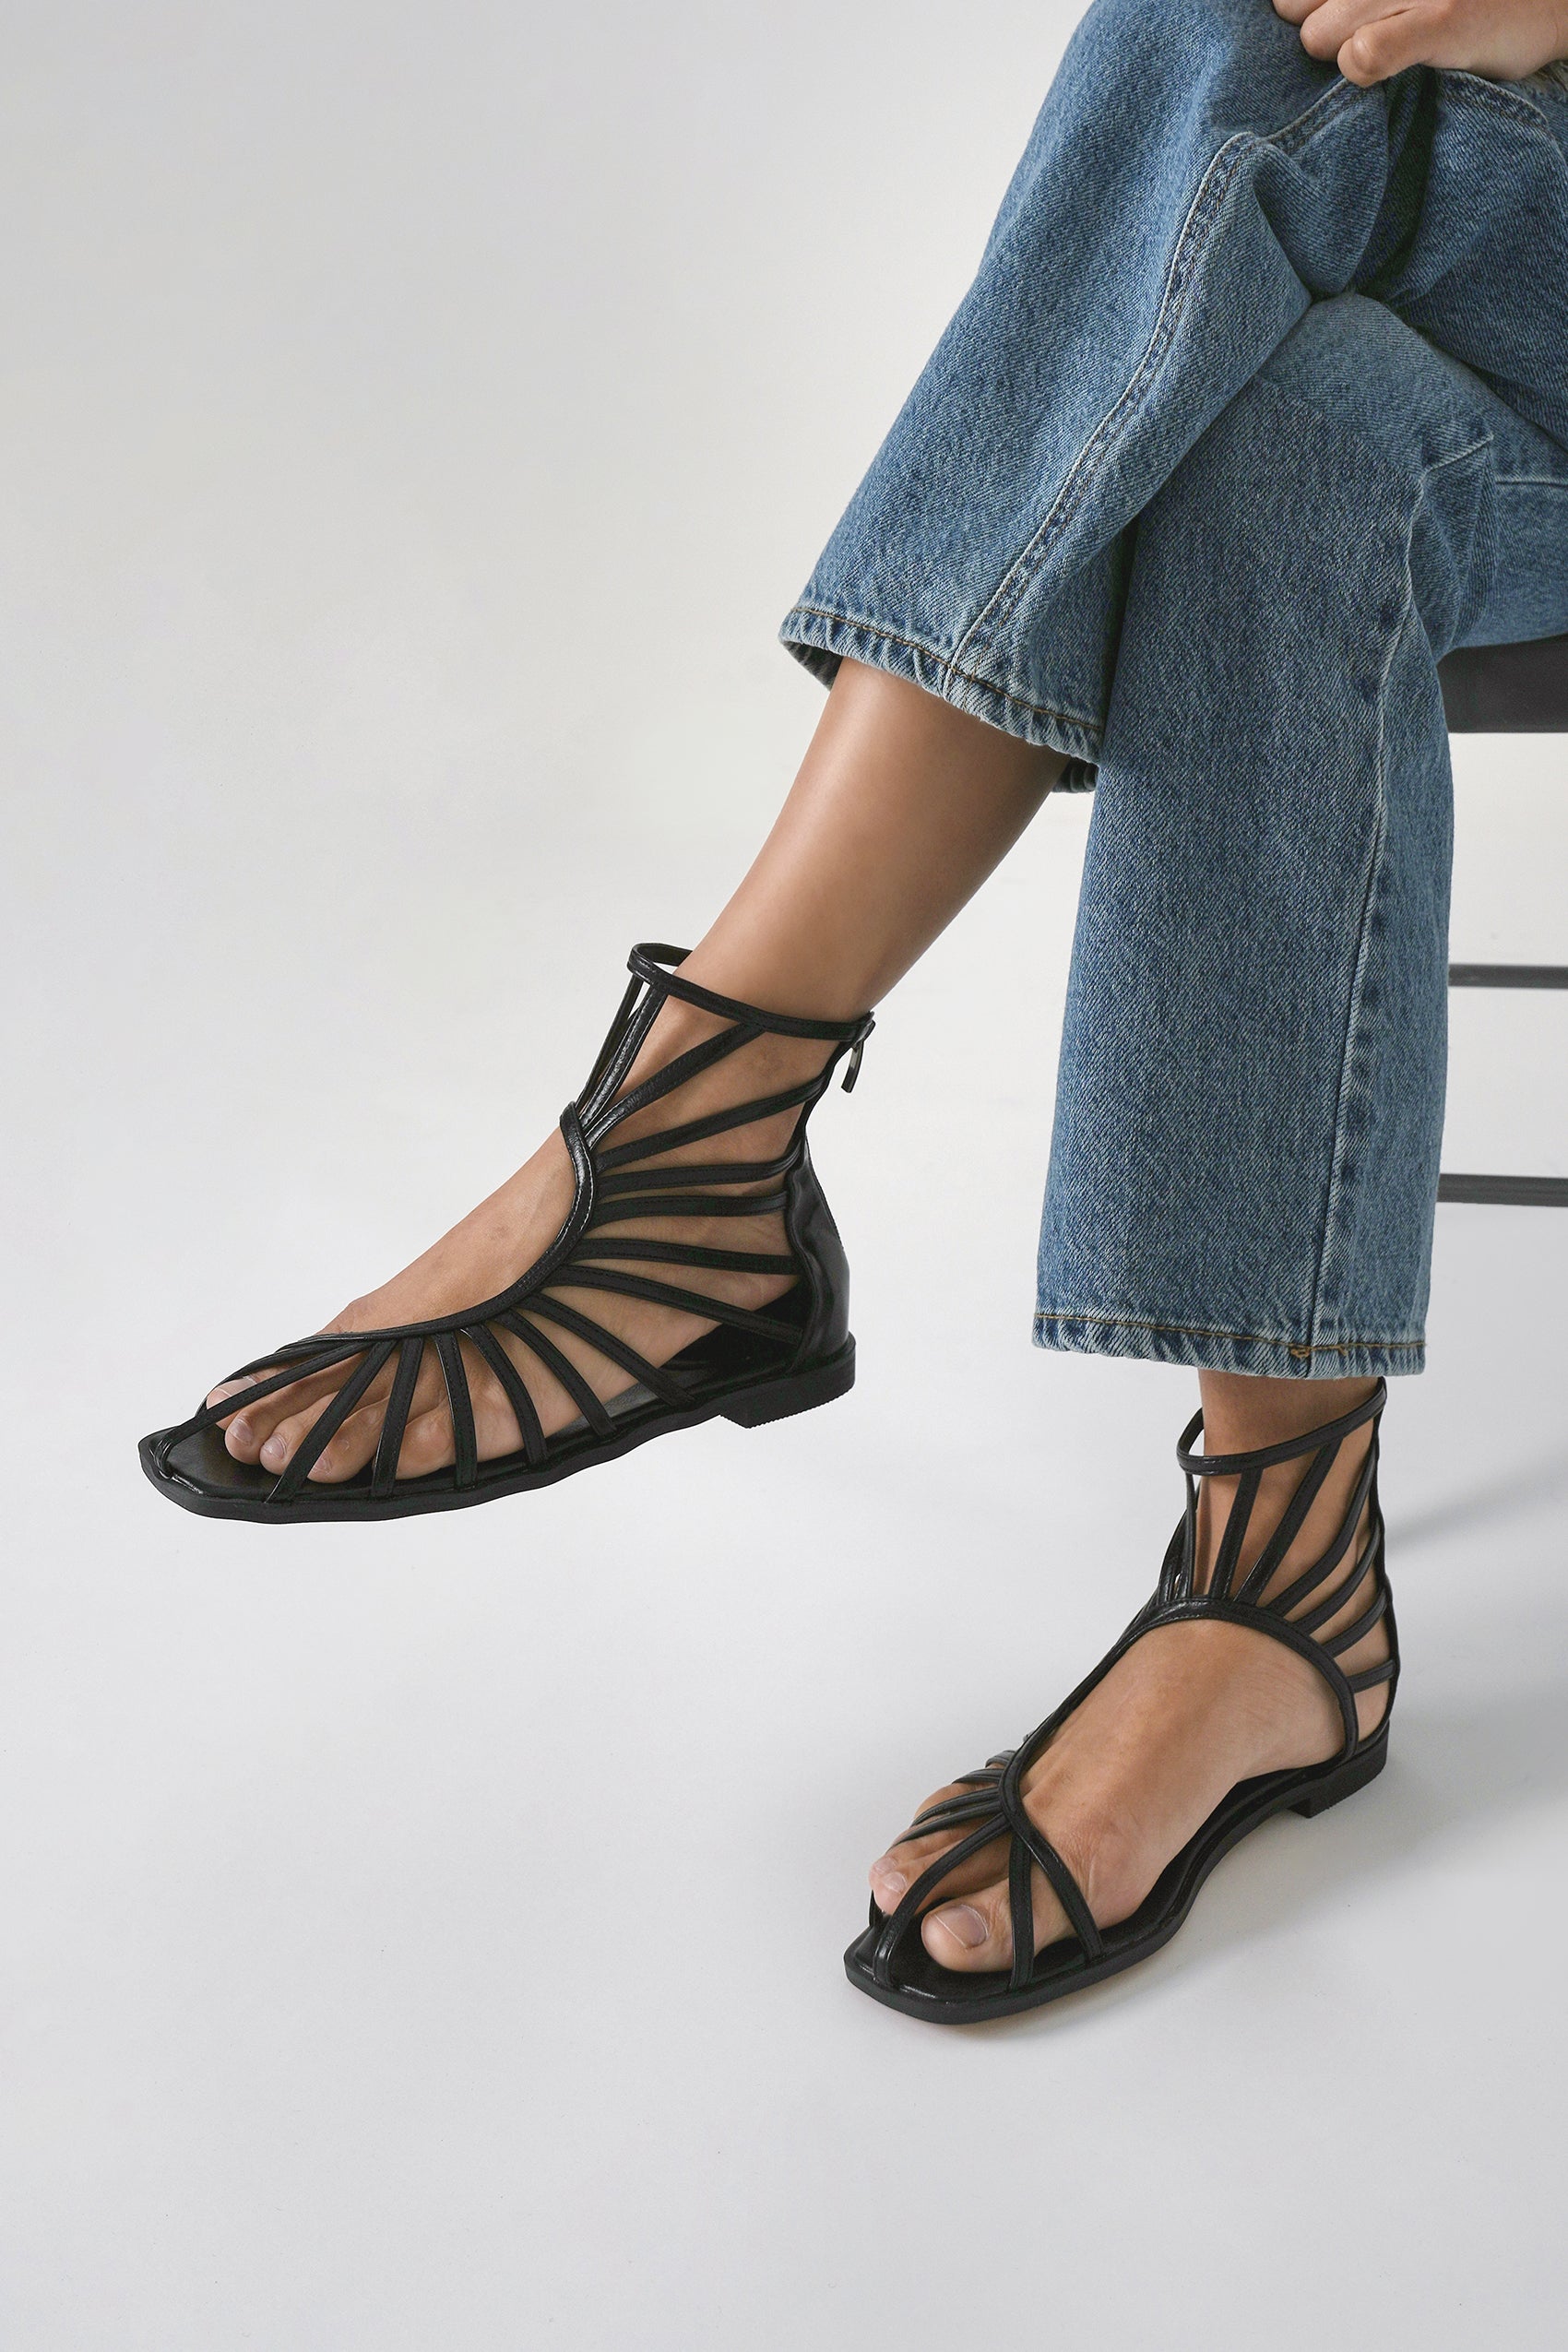 Jessica Simpson | Shoes | Jessica Simpson Gold Strappy Stiletto Heel Zip Up  Sandals Womens Size 6 B | Poshmark